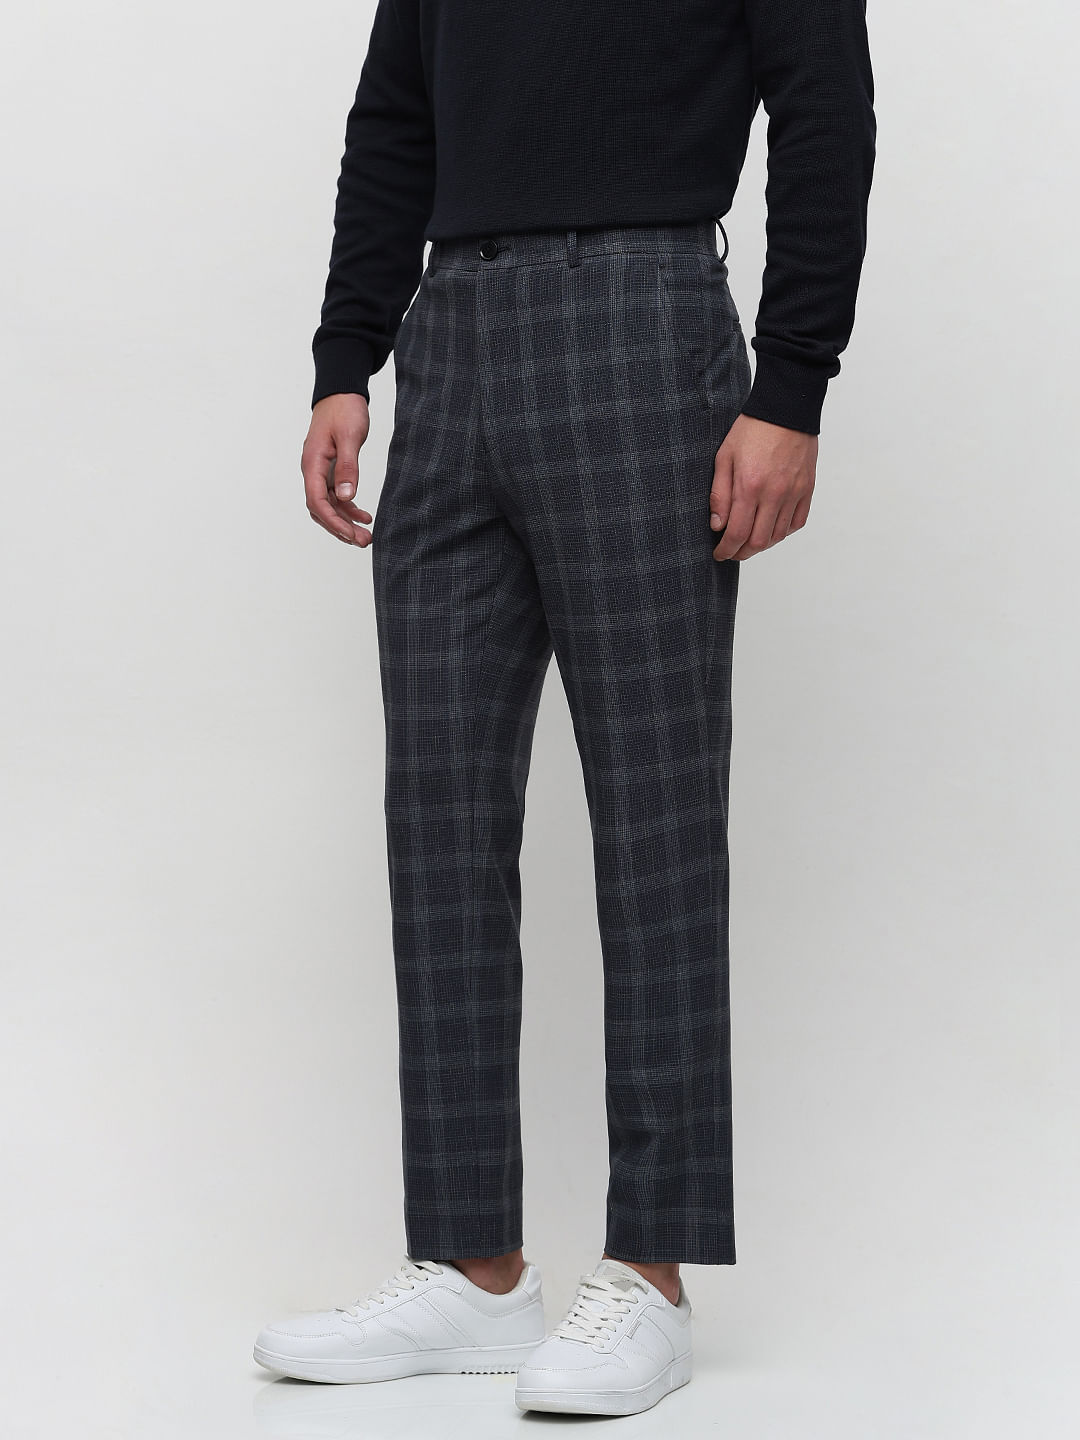 Star by Julien Macdonald Jade Green Zip Detail Tailored Trousers | Freemans